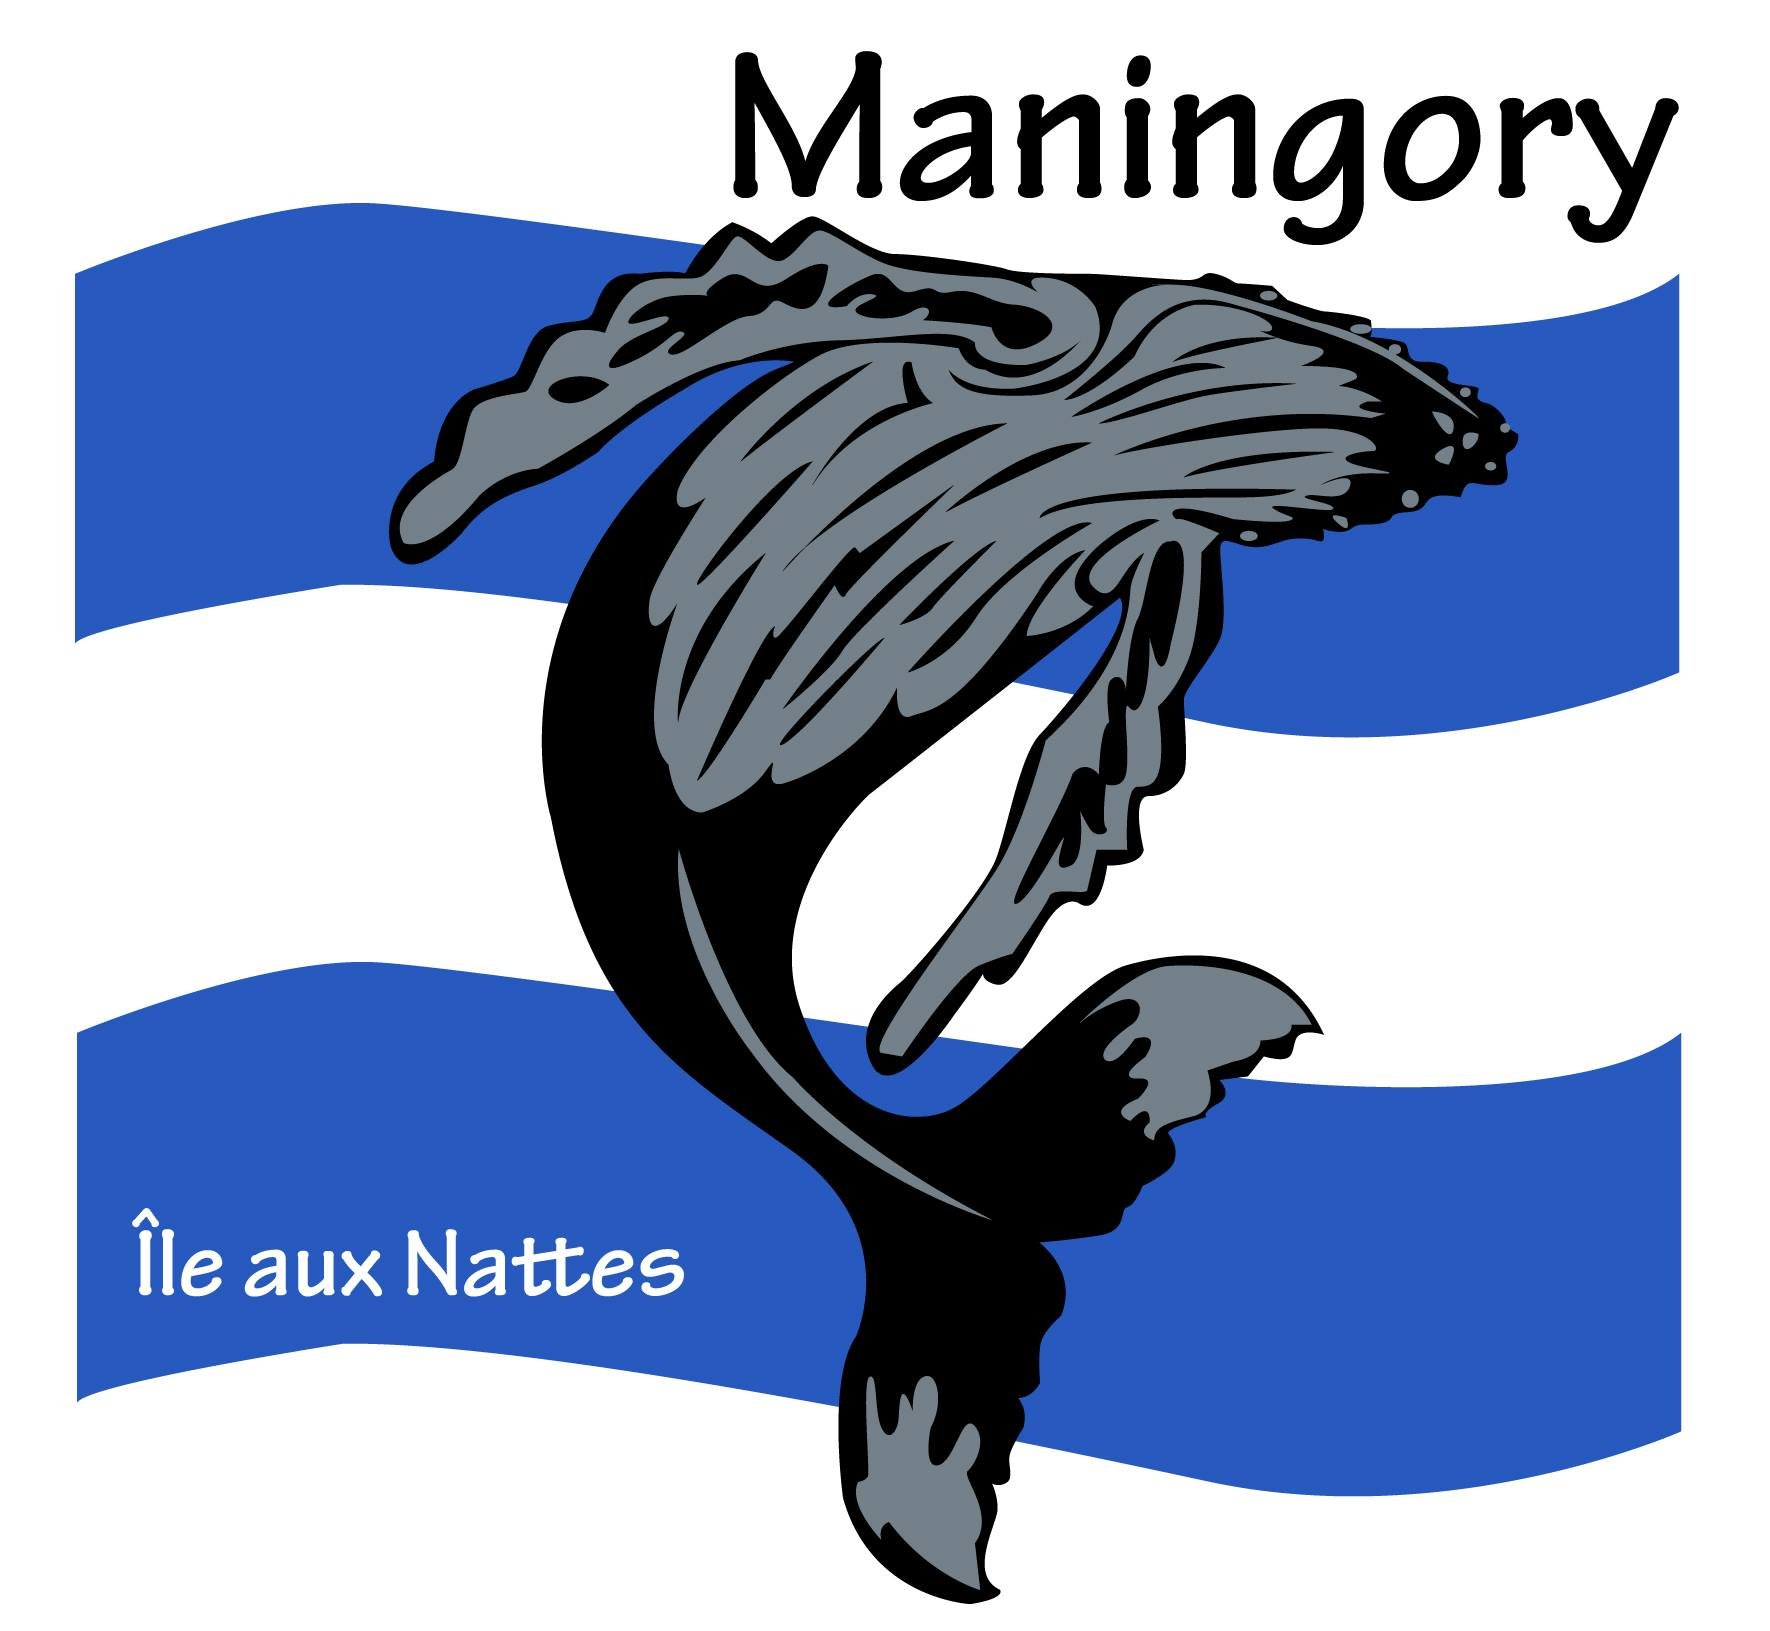 Maningory.jpg